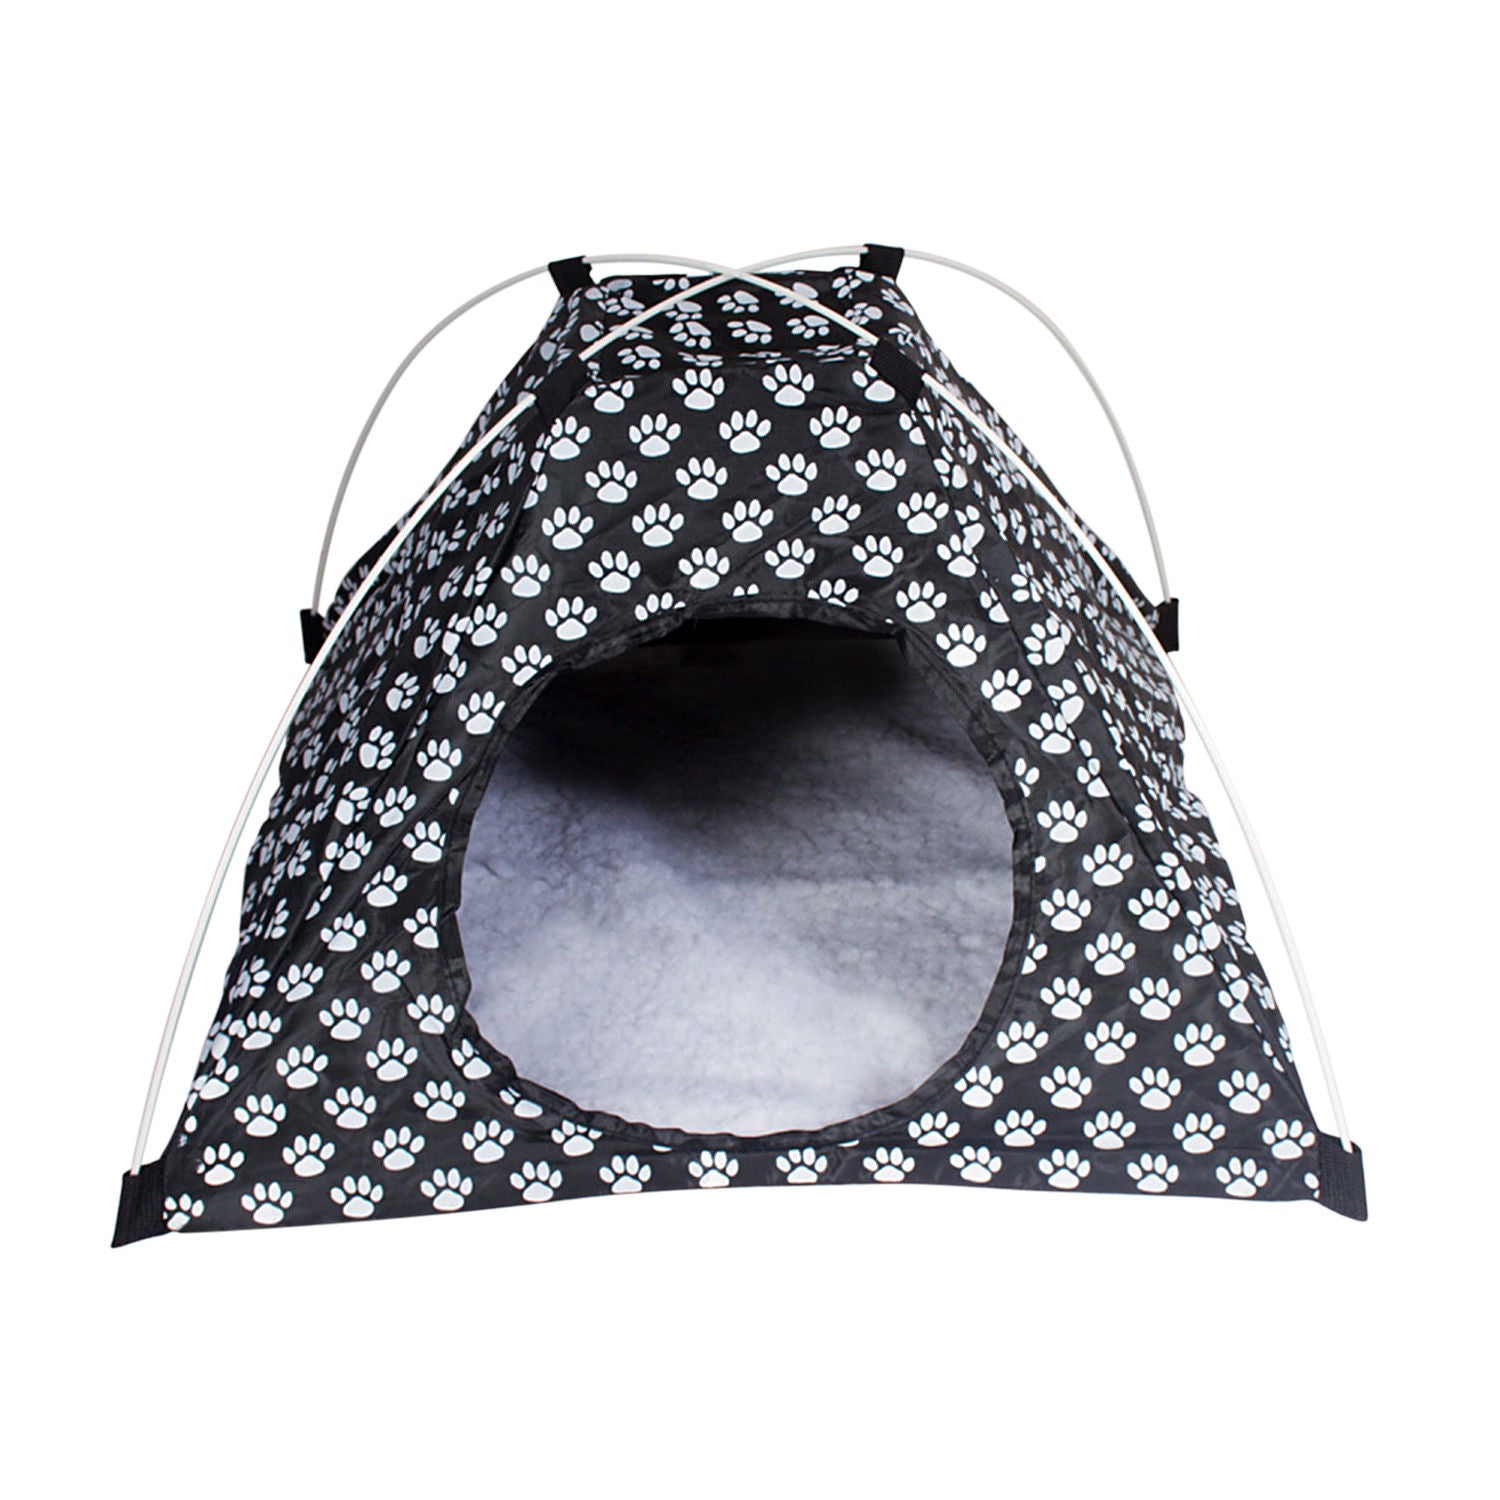 Portable Cat Pet Tent - Small Dog Puppy Playpen For Outdoor / Indoor